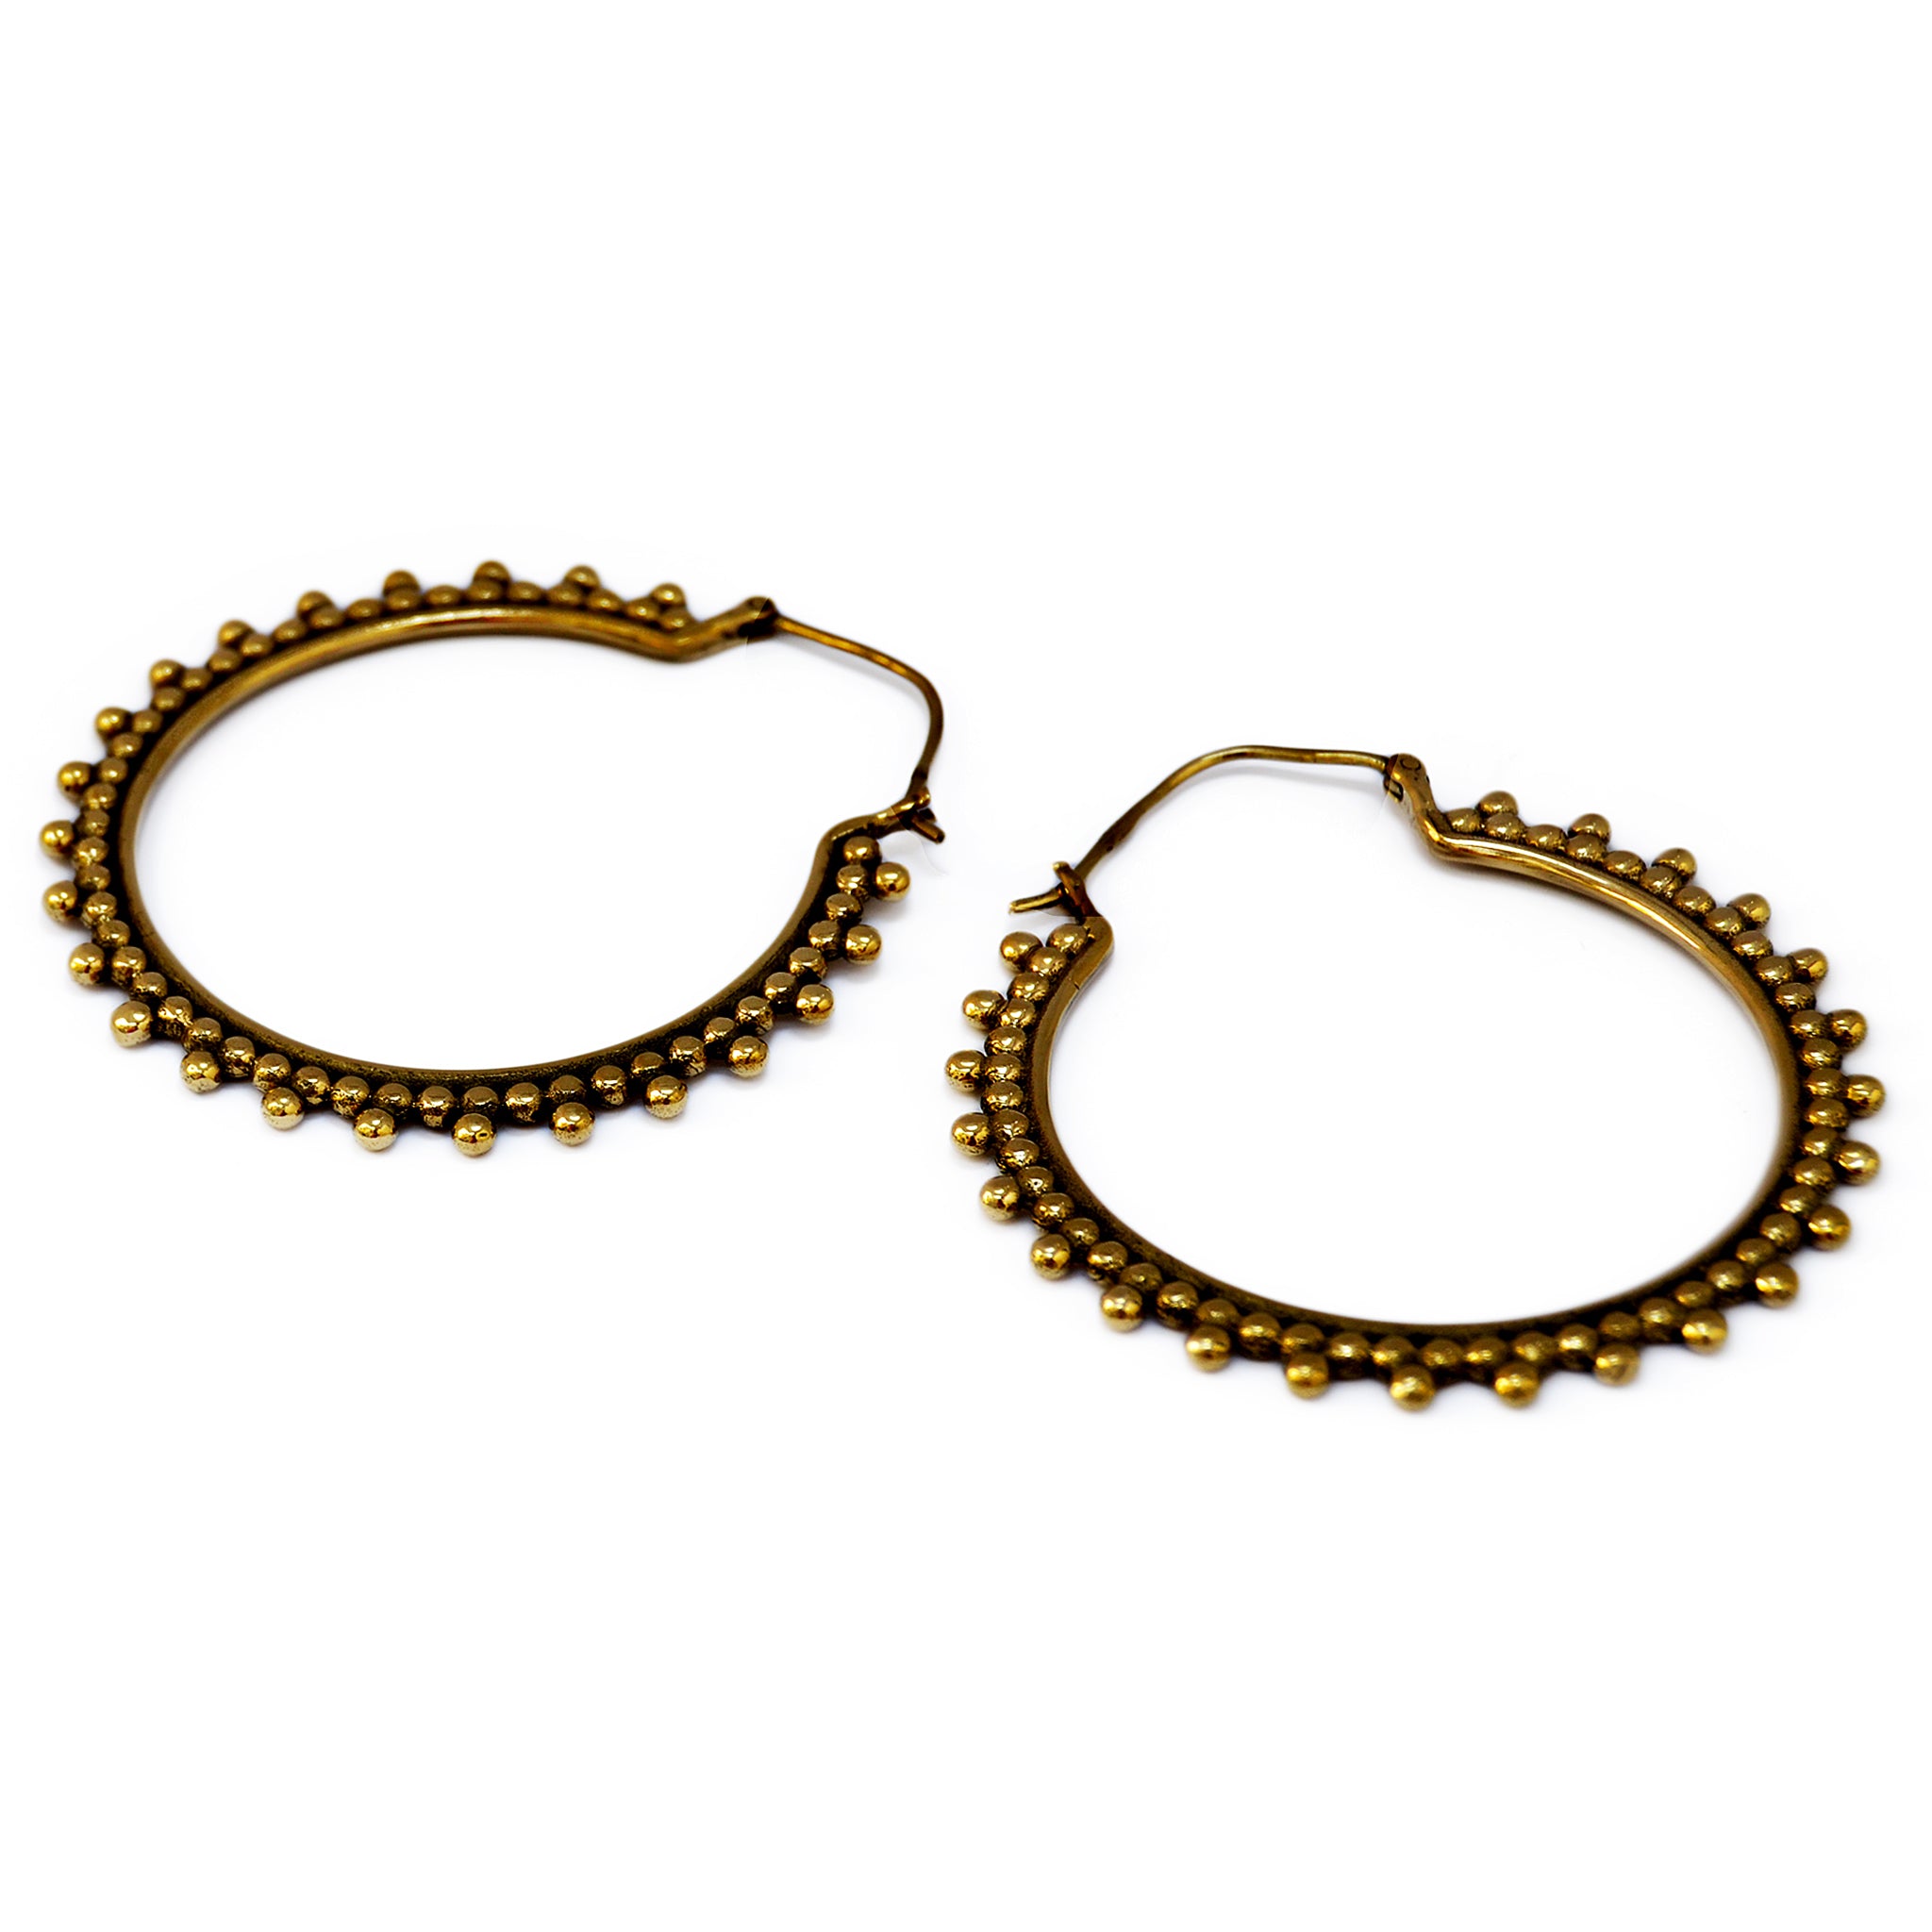 Big hoop earrings with small ornate balls